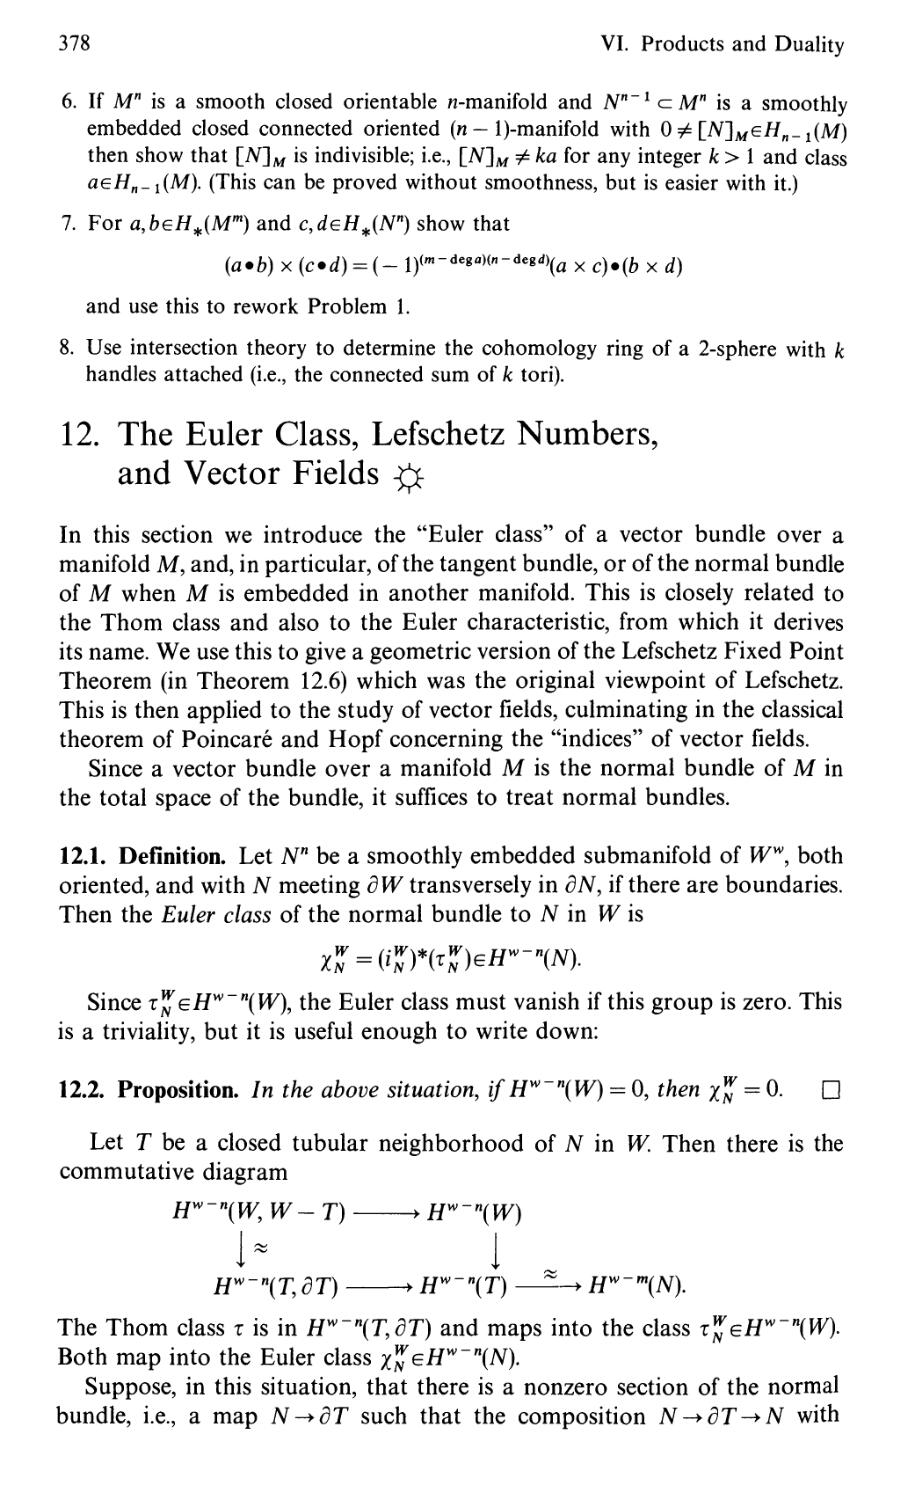 12. The Euler Class, Lefschetz Numbers, and Vector Fields